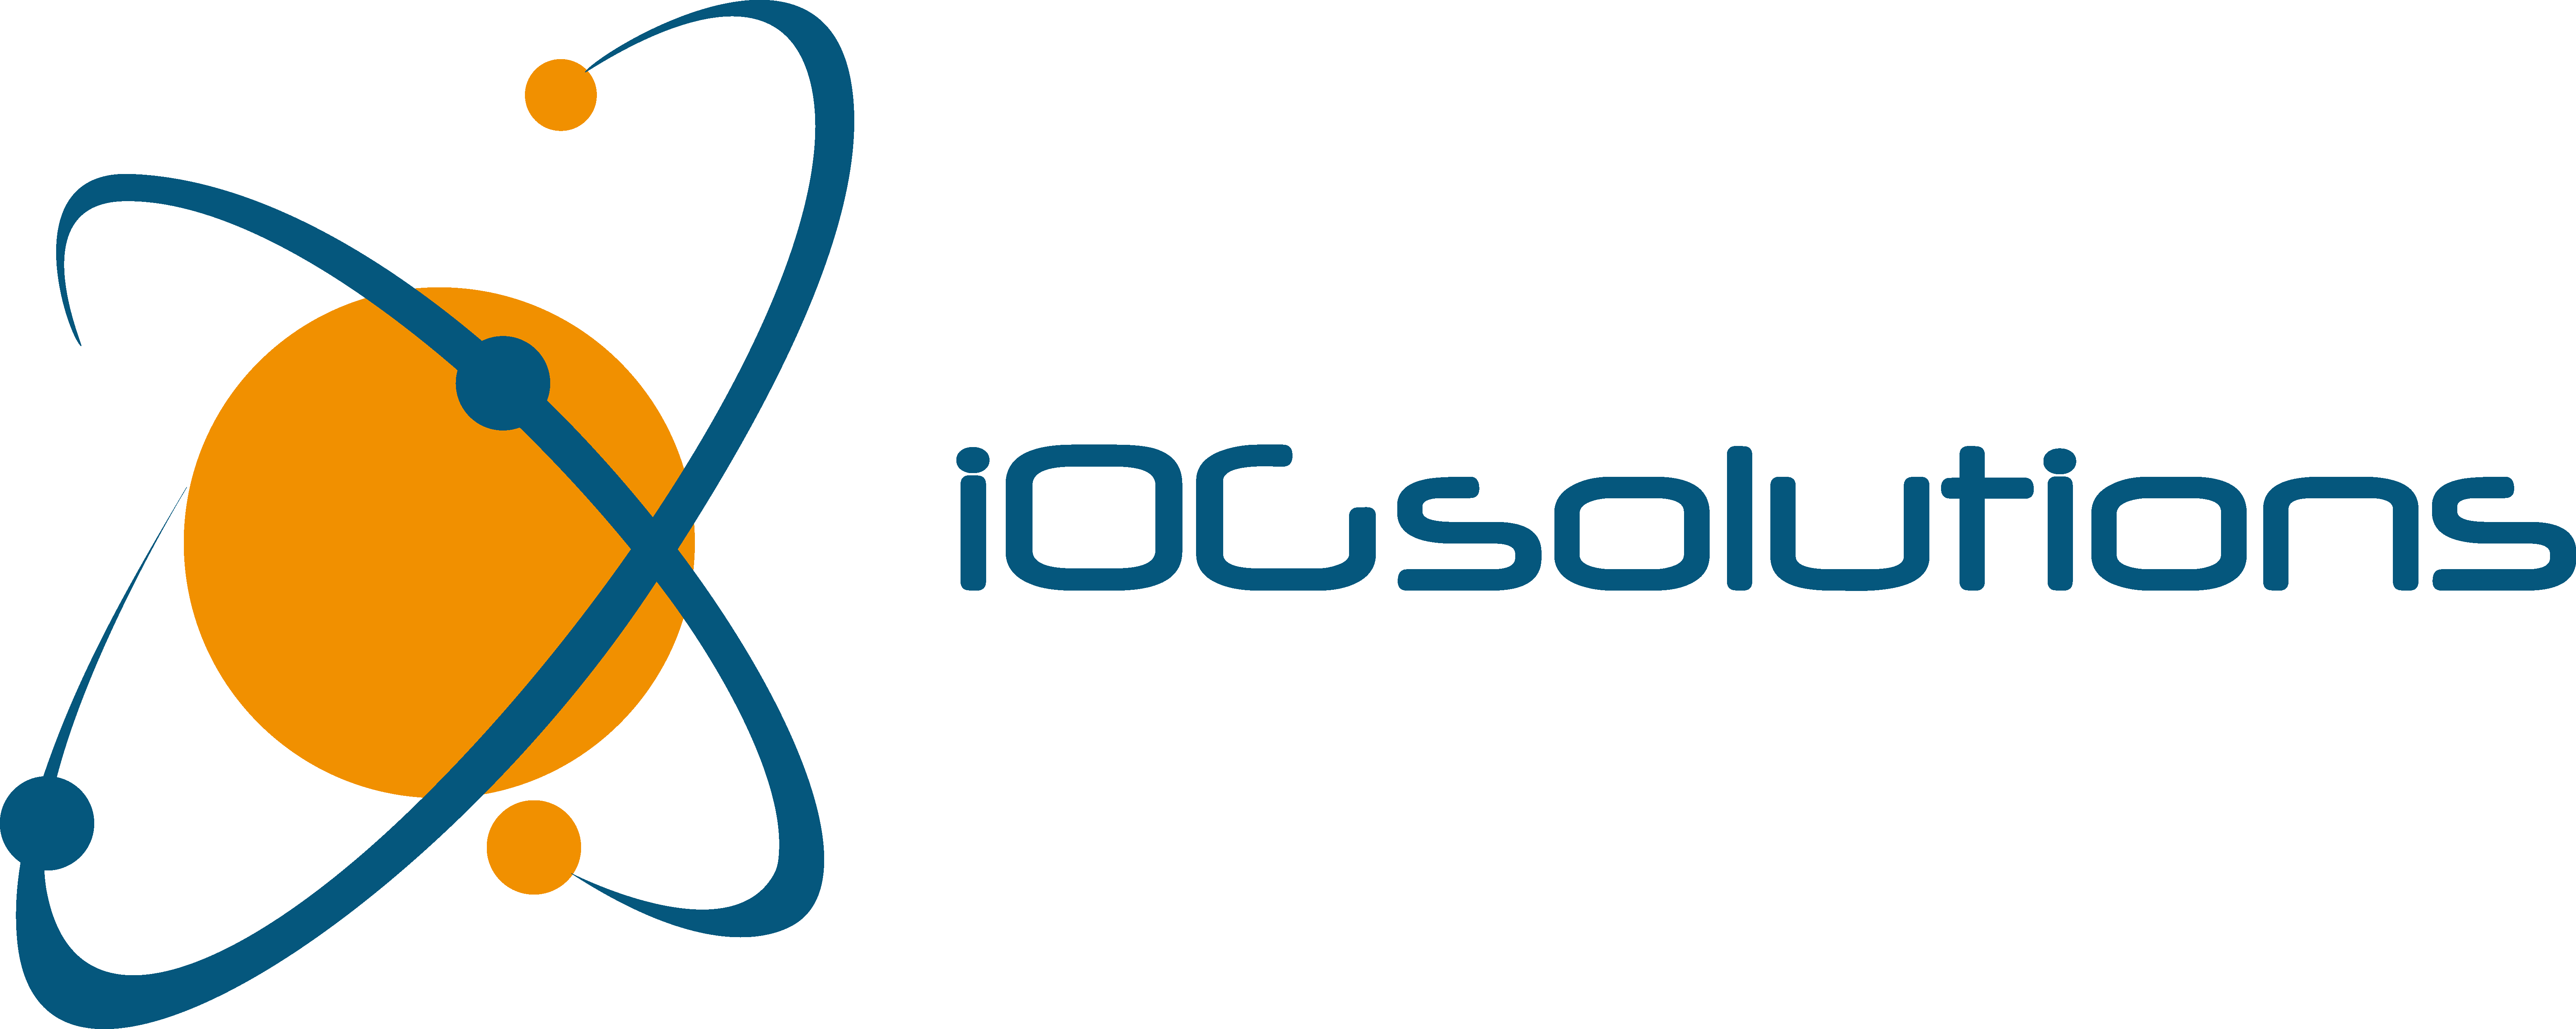 iOG logo high full 002